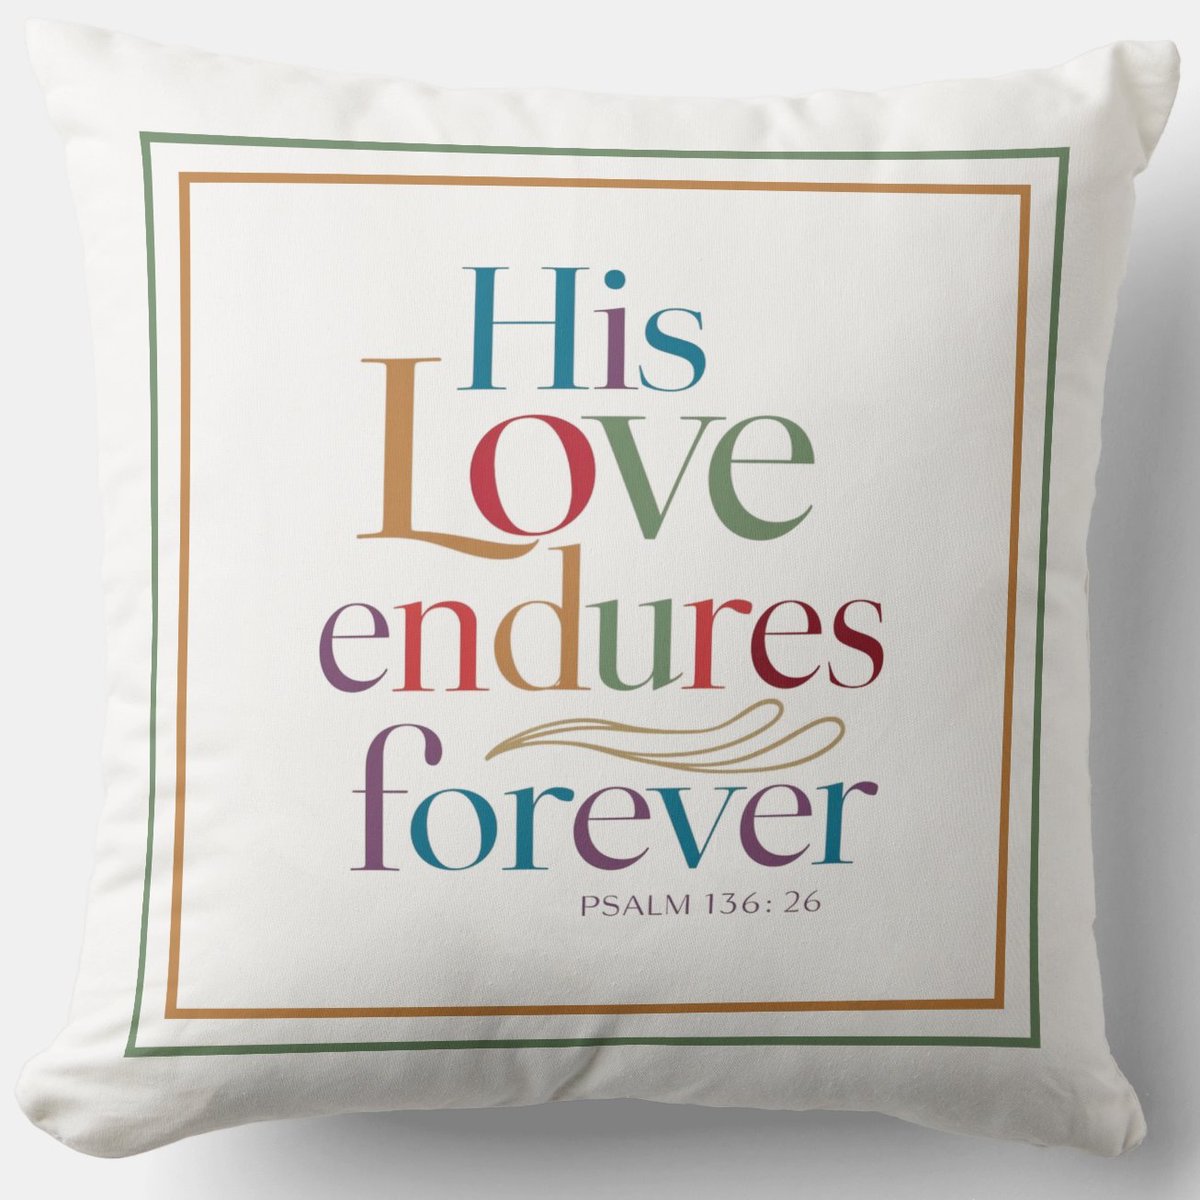 His Love Endures Forever Cushion zazzle.com/his_love_endur… Typography Throw #Pillow #Blessing #JesusChrist #JesusSaves #Jesus #christian #spiritual #Homedecoration #uniquegift #giftideas #MothersDayGifts #giftformom #giftidea #HolySpirit #pillows #giftshop #giftsforher #giftsformom